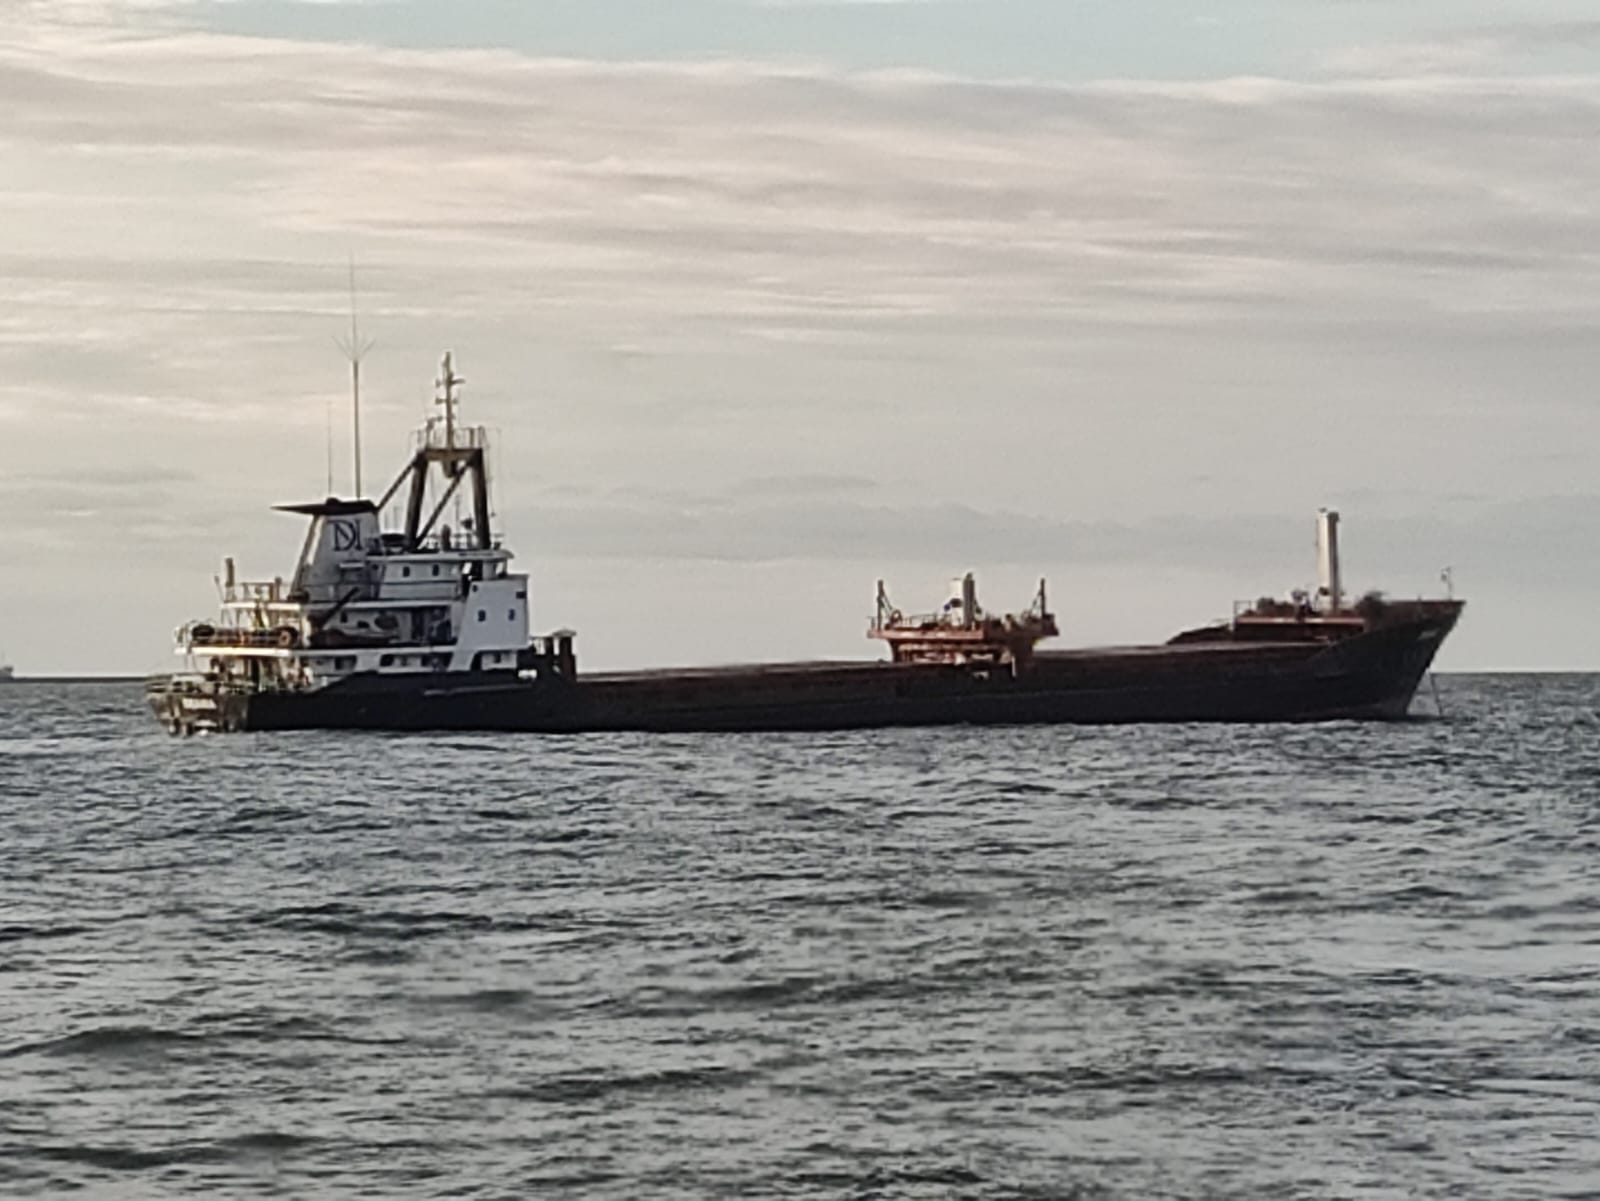 Sea mine suspected as explosion hits cargo ship close to Ukraine border